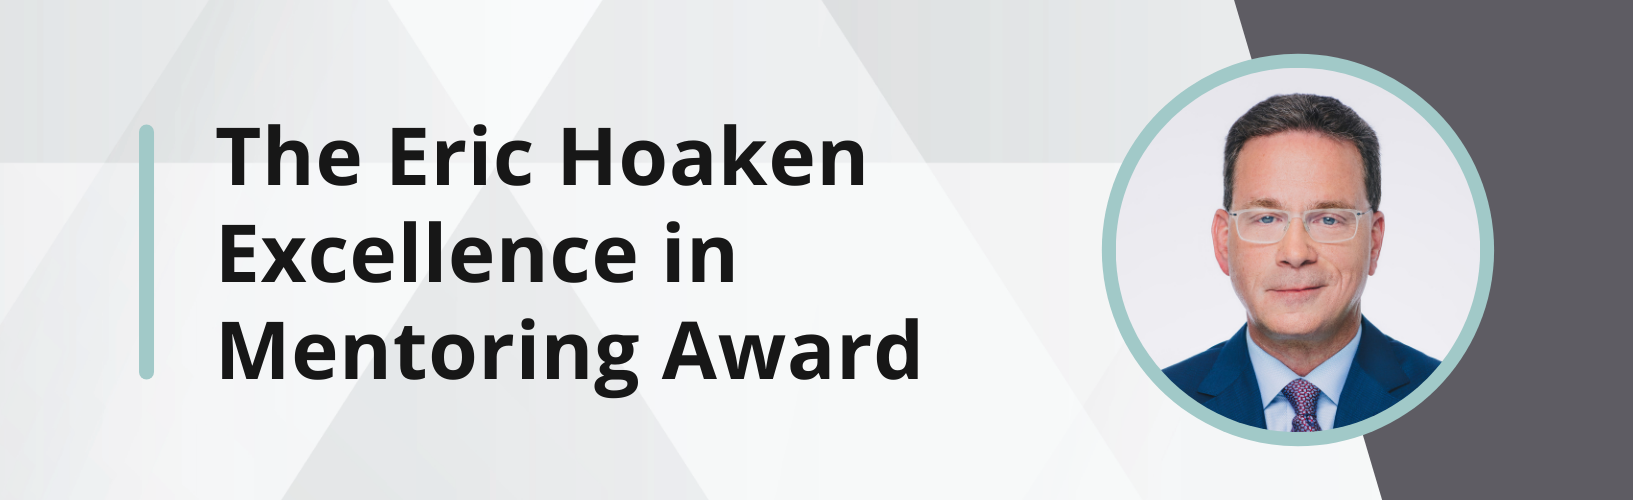 The Eric Hoaken Excellence in Mentoring Award